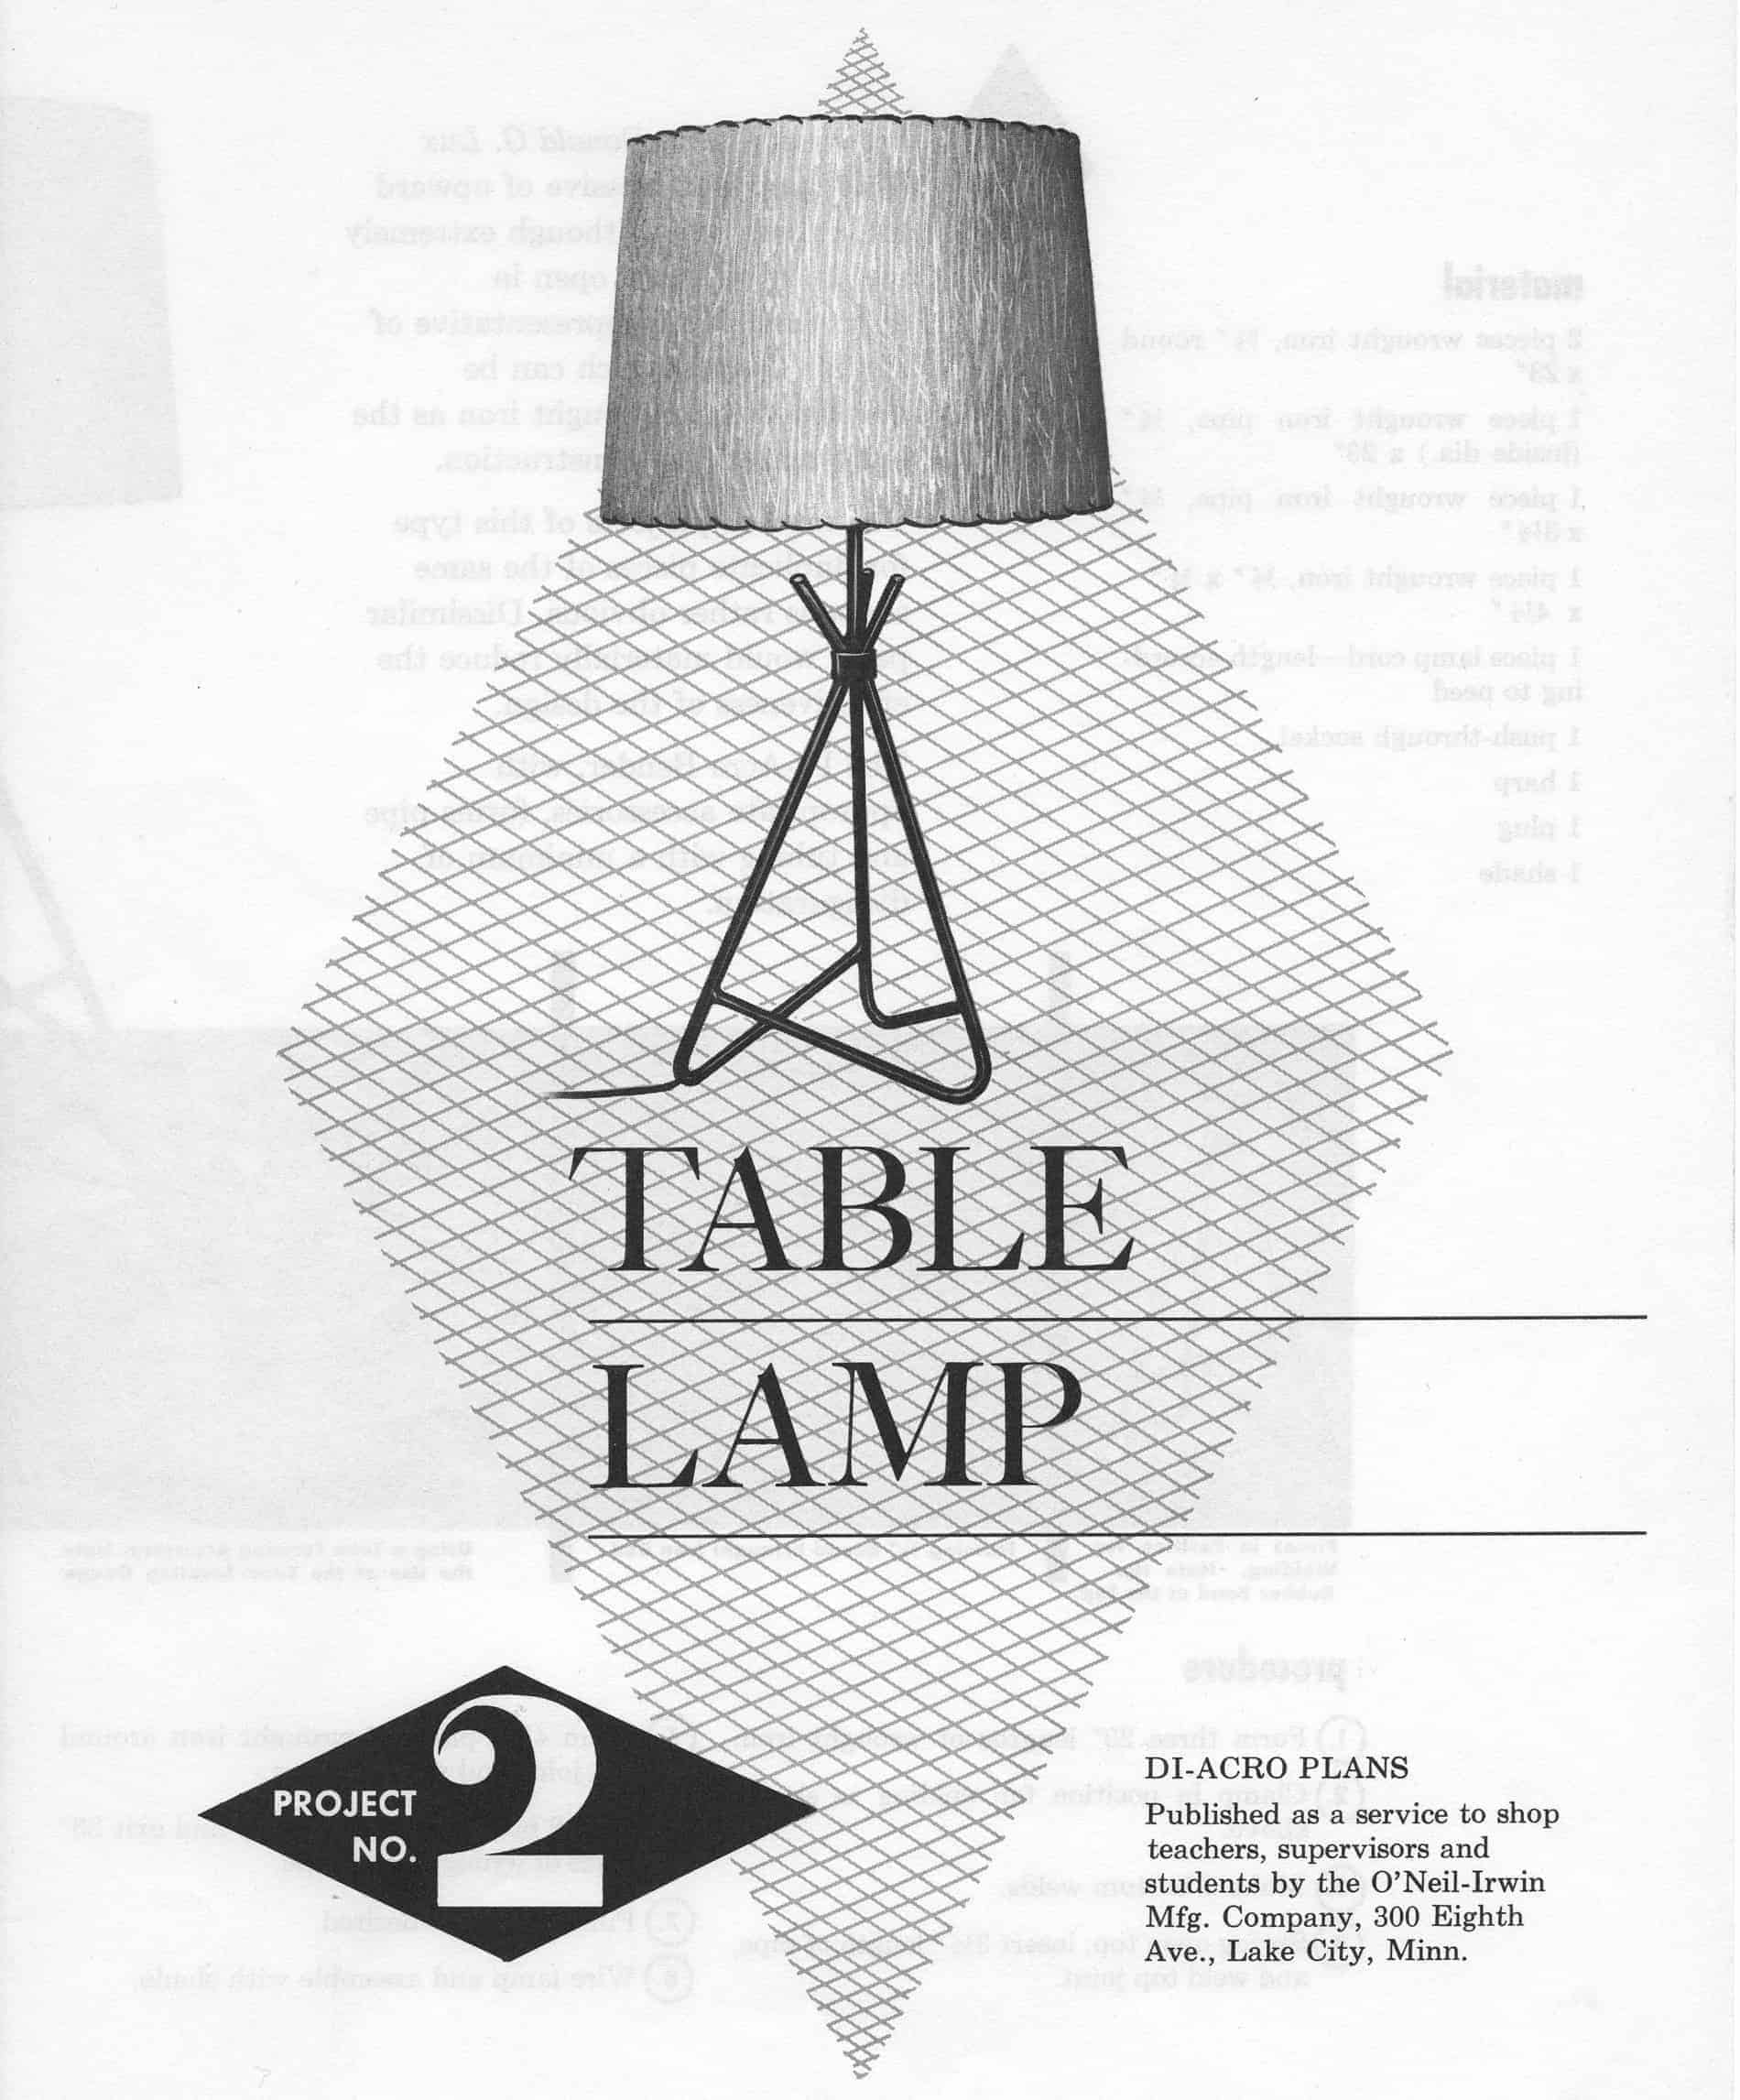 Di-Acro Metal Fabrication Table Lamp